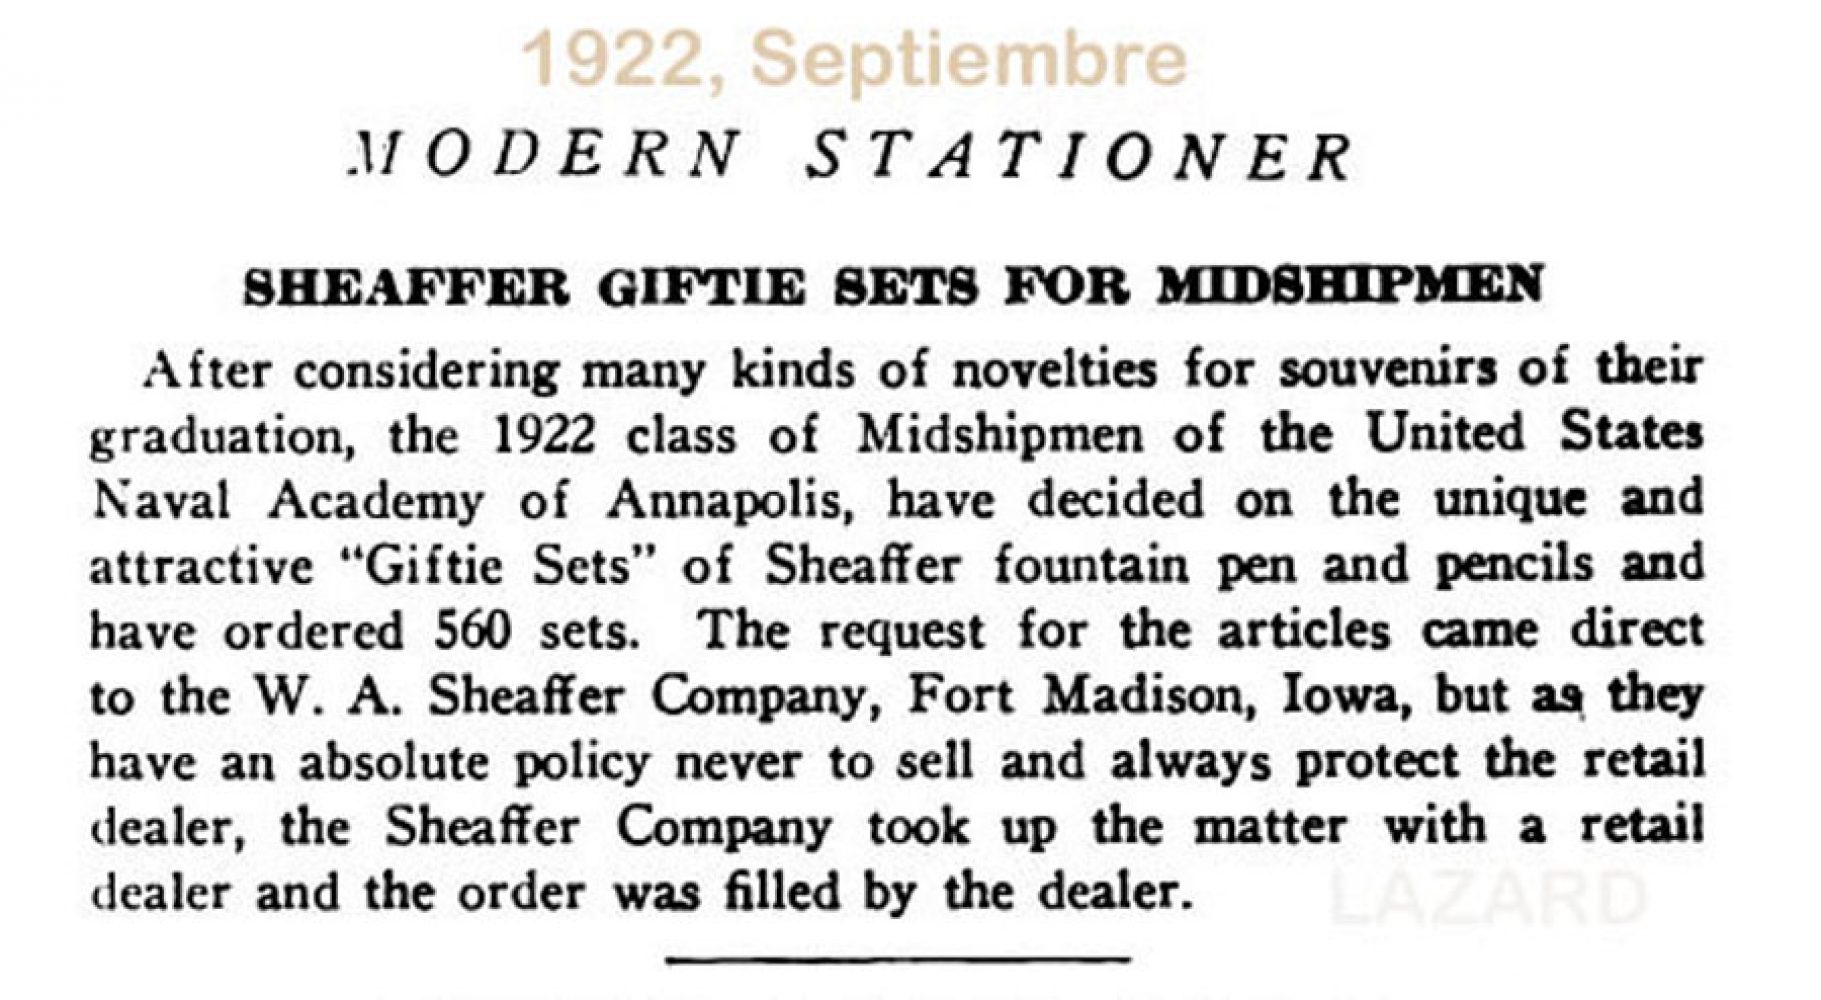 1922 09 01 Sheaffer protege a dealers y no vende directamente